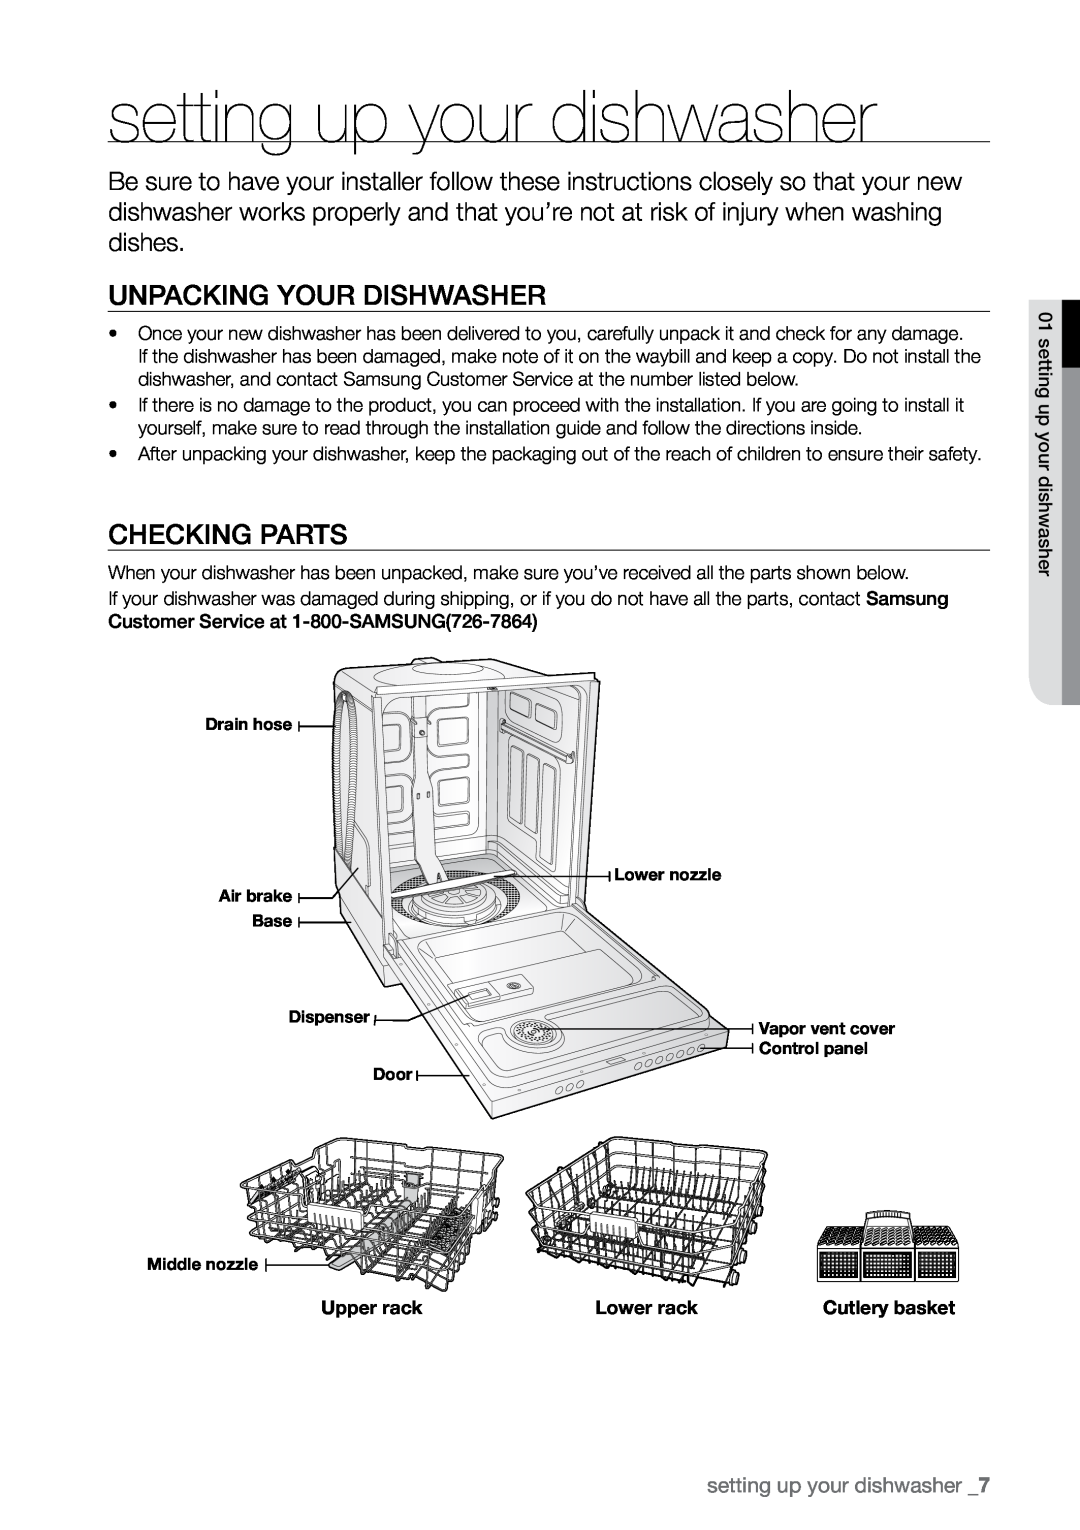 Samsung DMR77LHS Unpacking your dishwasher, Checking parts, setting up your dishwasher , Upper rack, Lower rack 